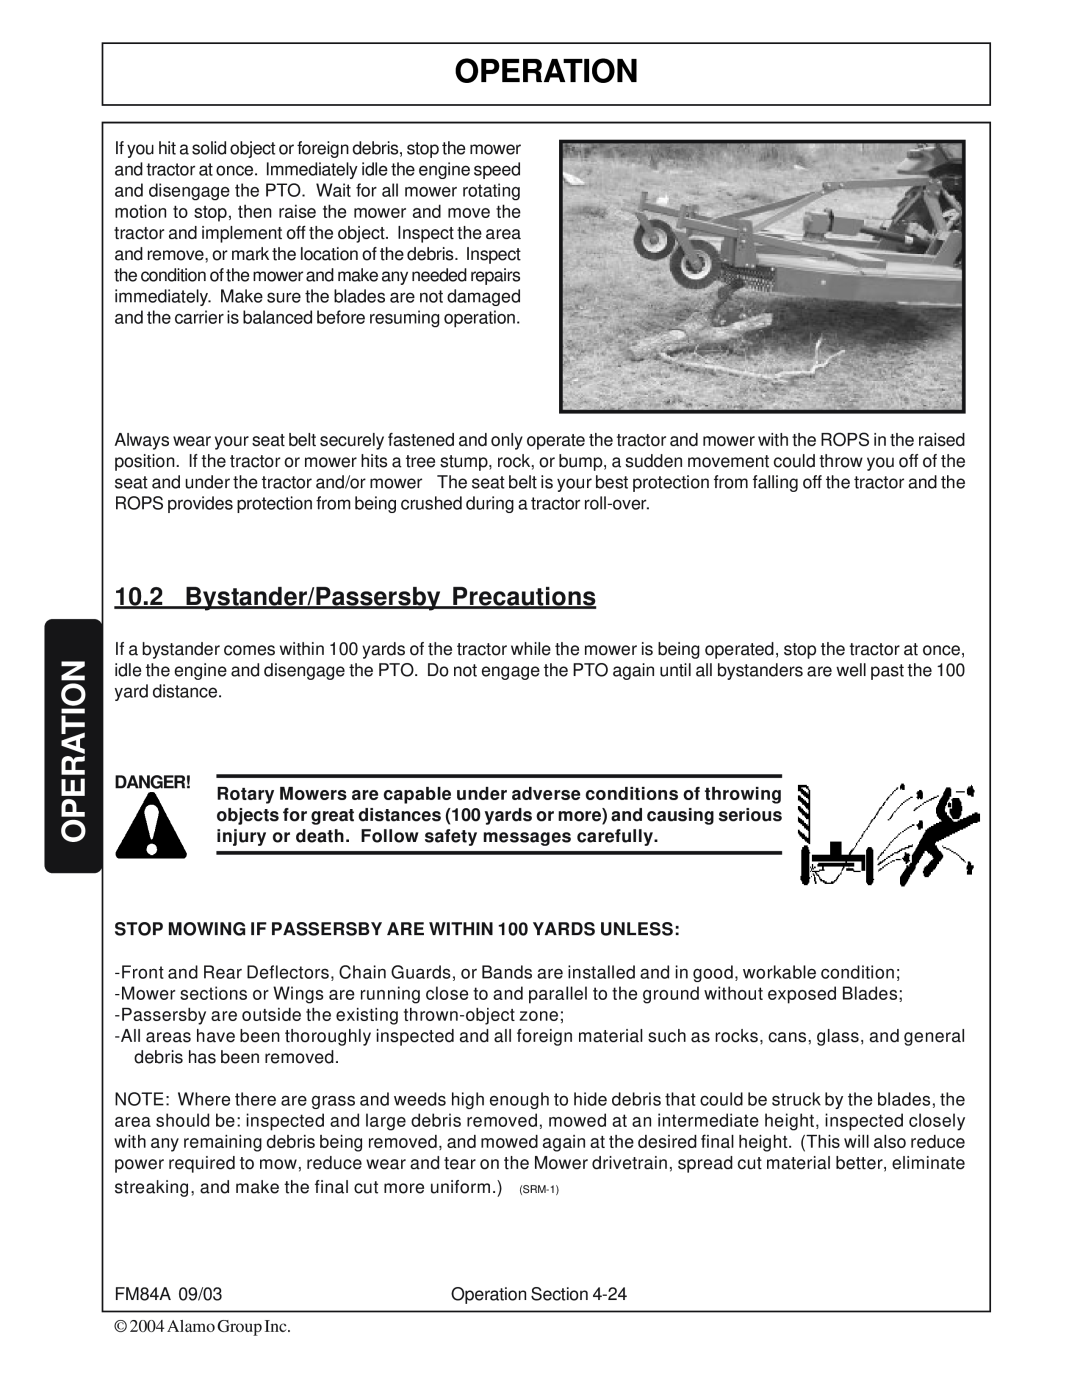 Servis-Rhino FM84A manual Operation, Bystander/Passersby Precautions 